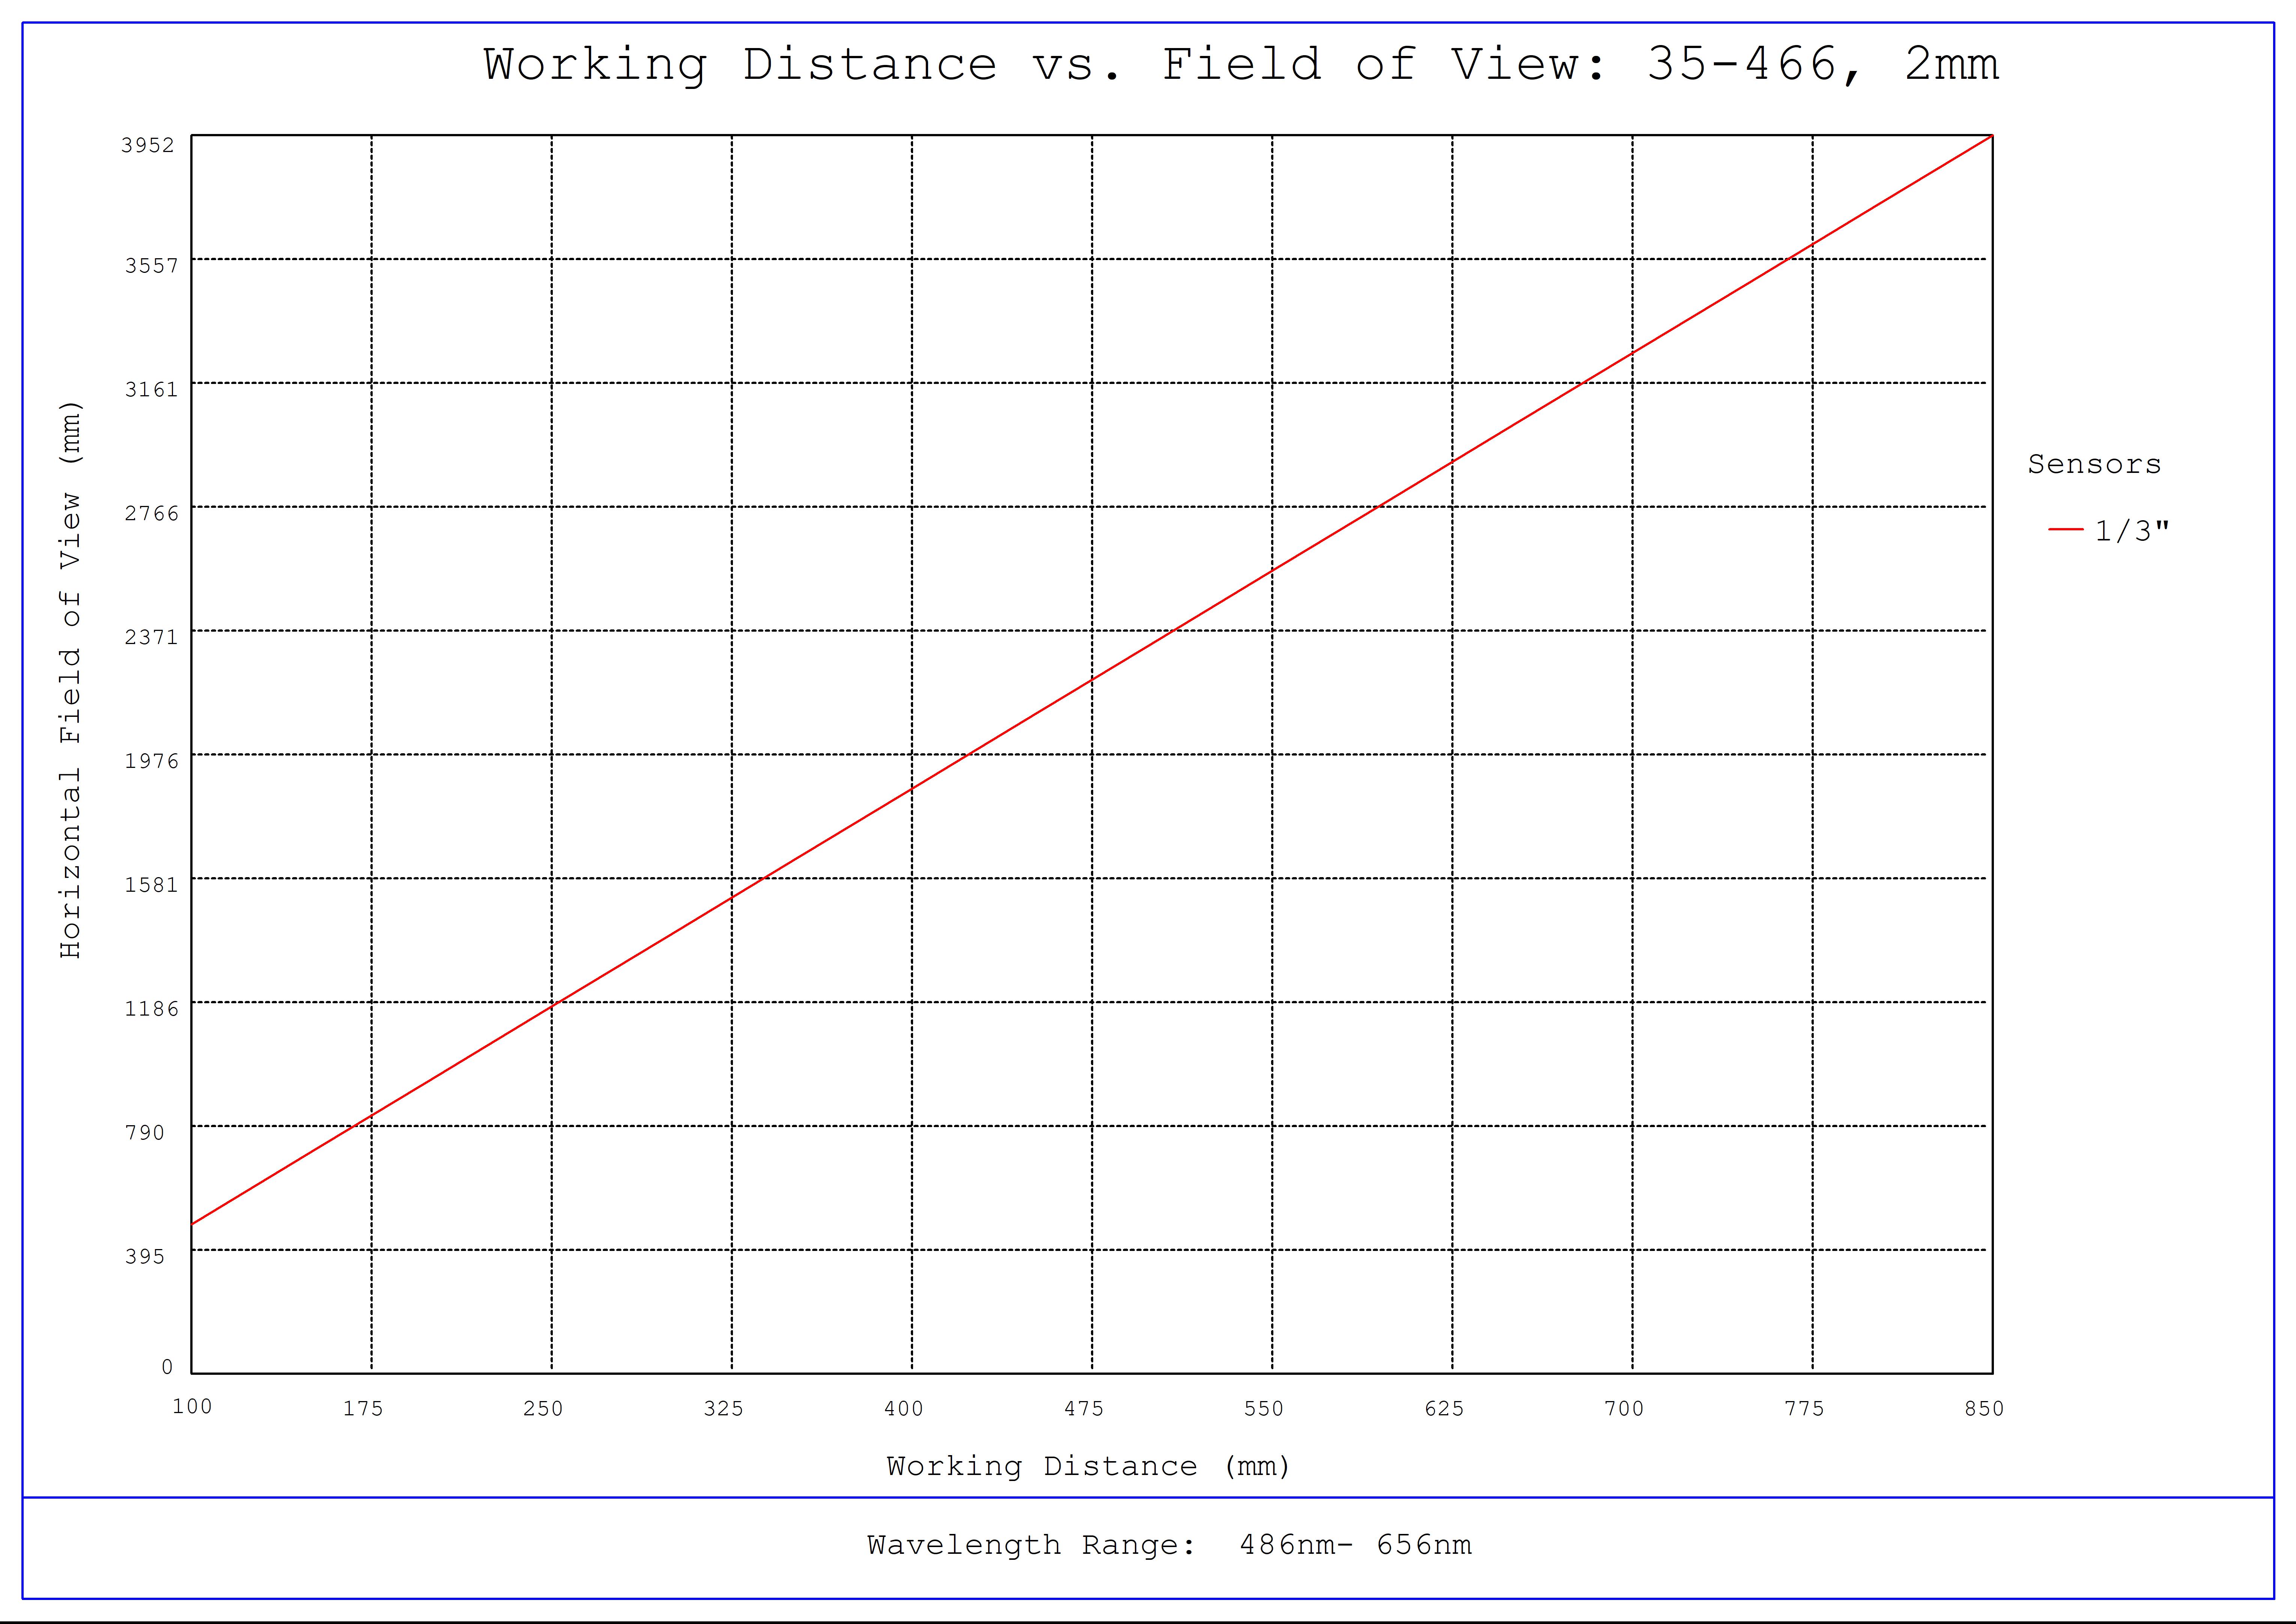 #35-466, 2mm FL f/4 IR-Cut, Blue Series M12 Lens, Working Distance versus Field of View Plot